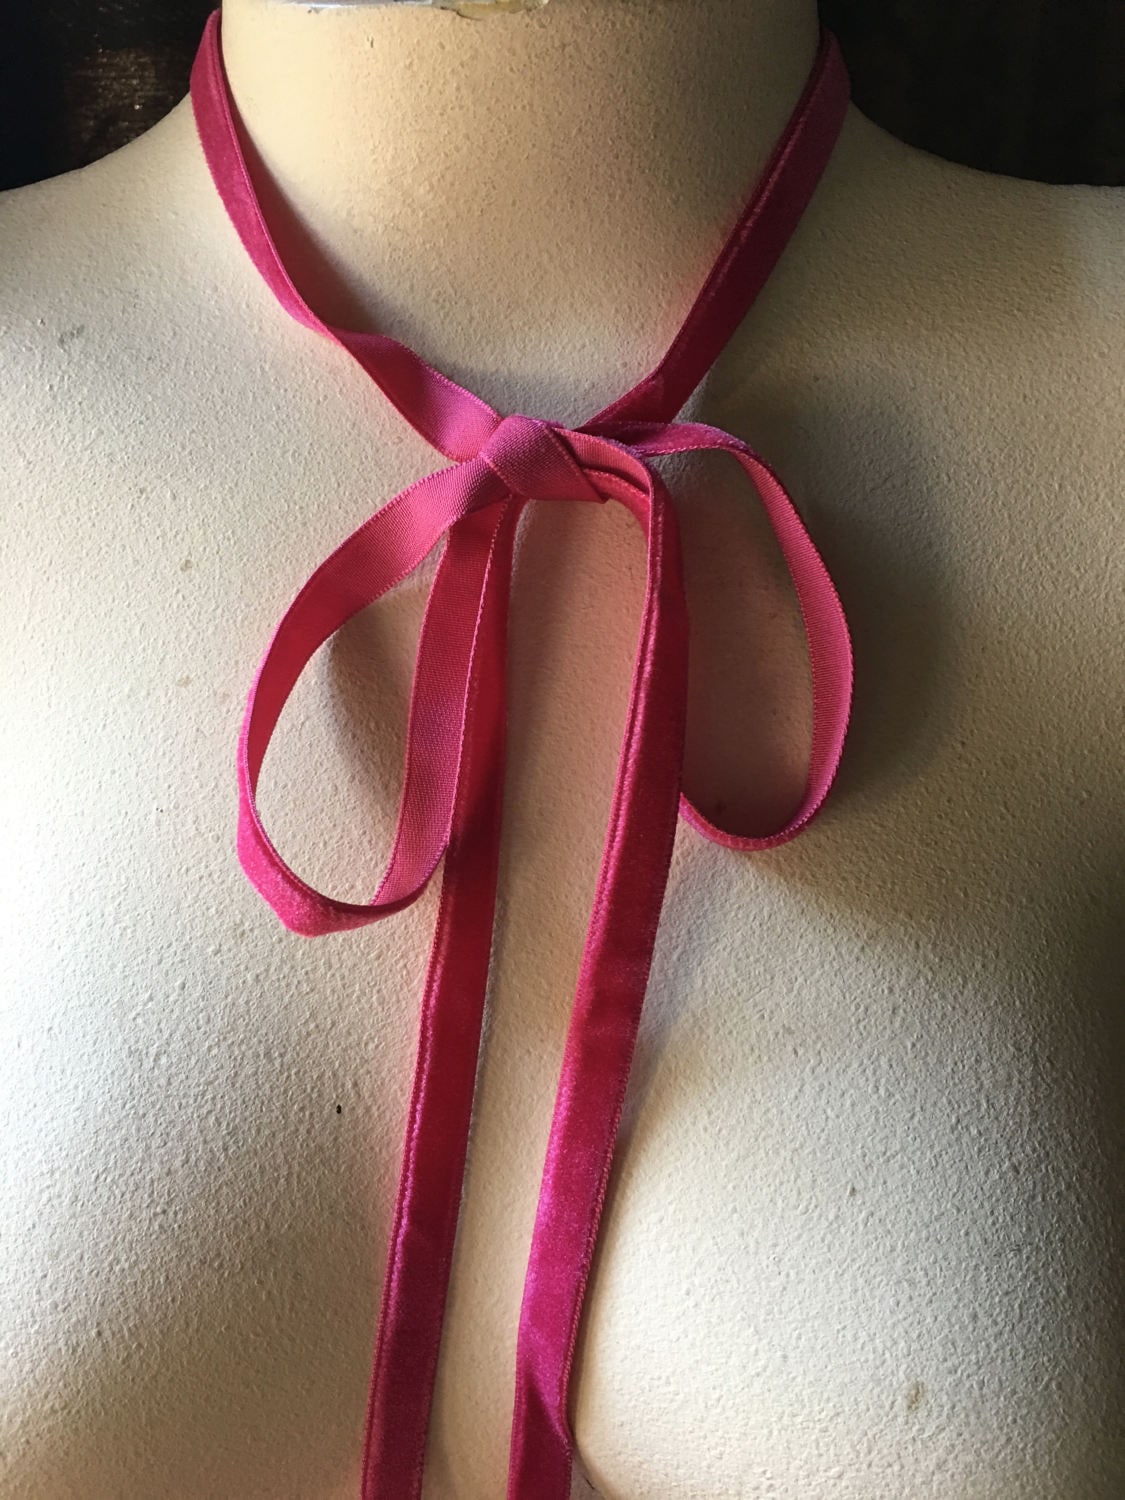 2.5 Hot Pink Velvet Ribbon – Peace of Mind Designs